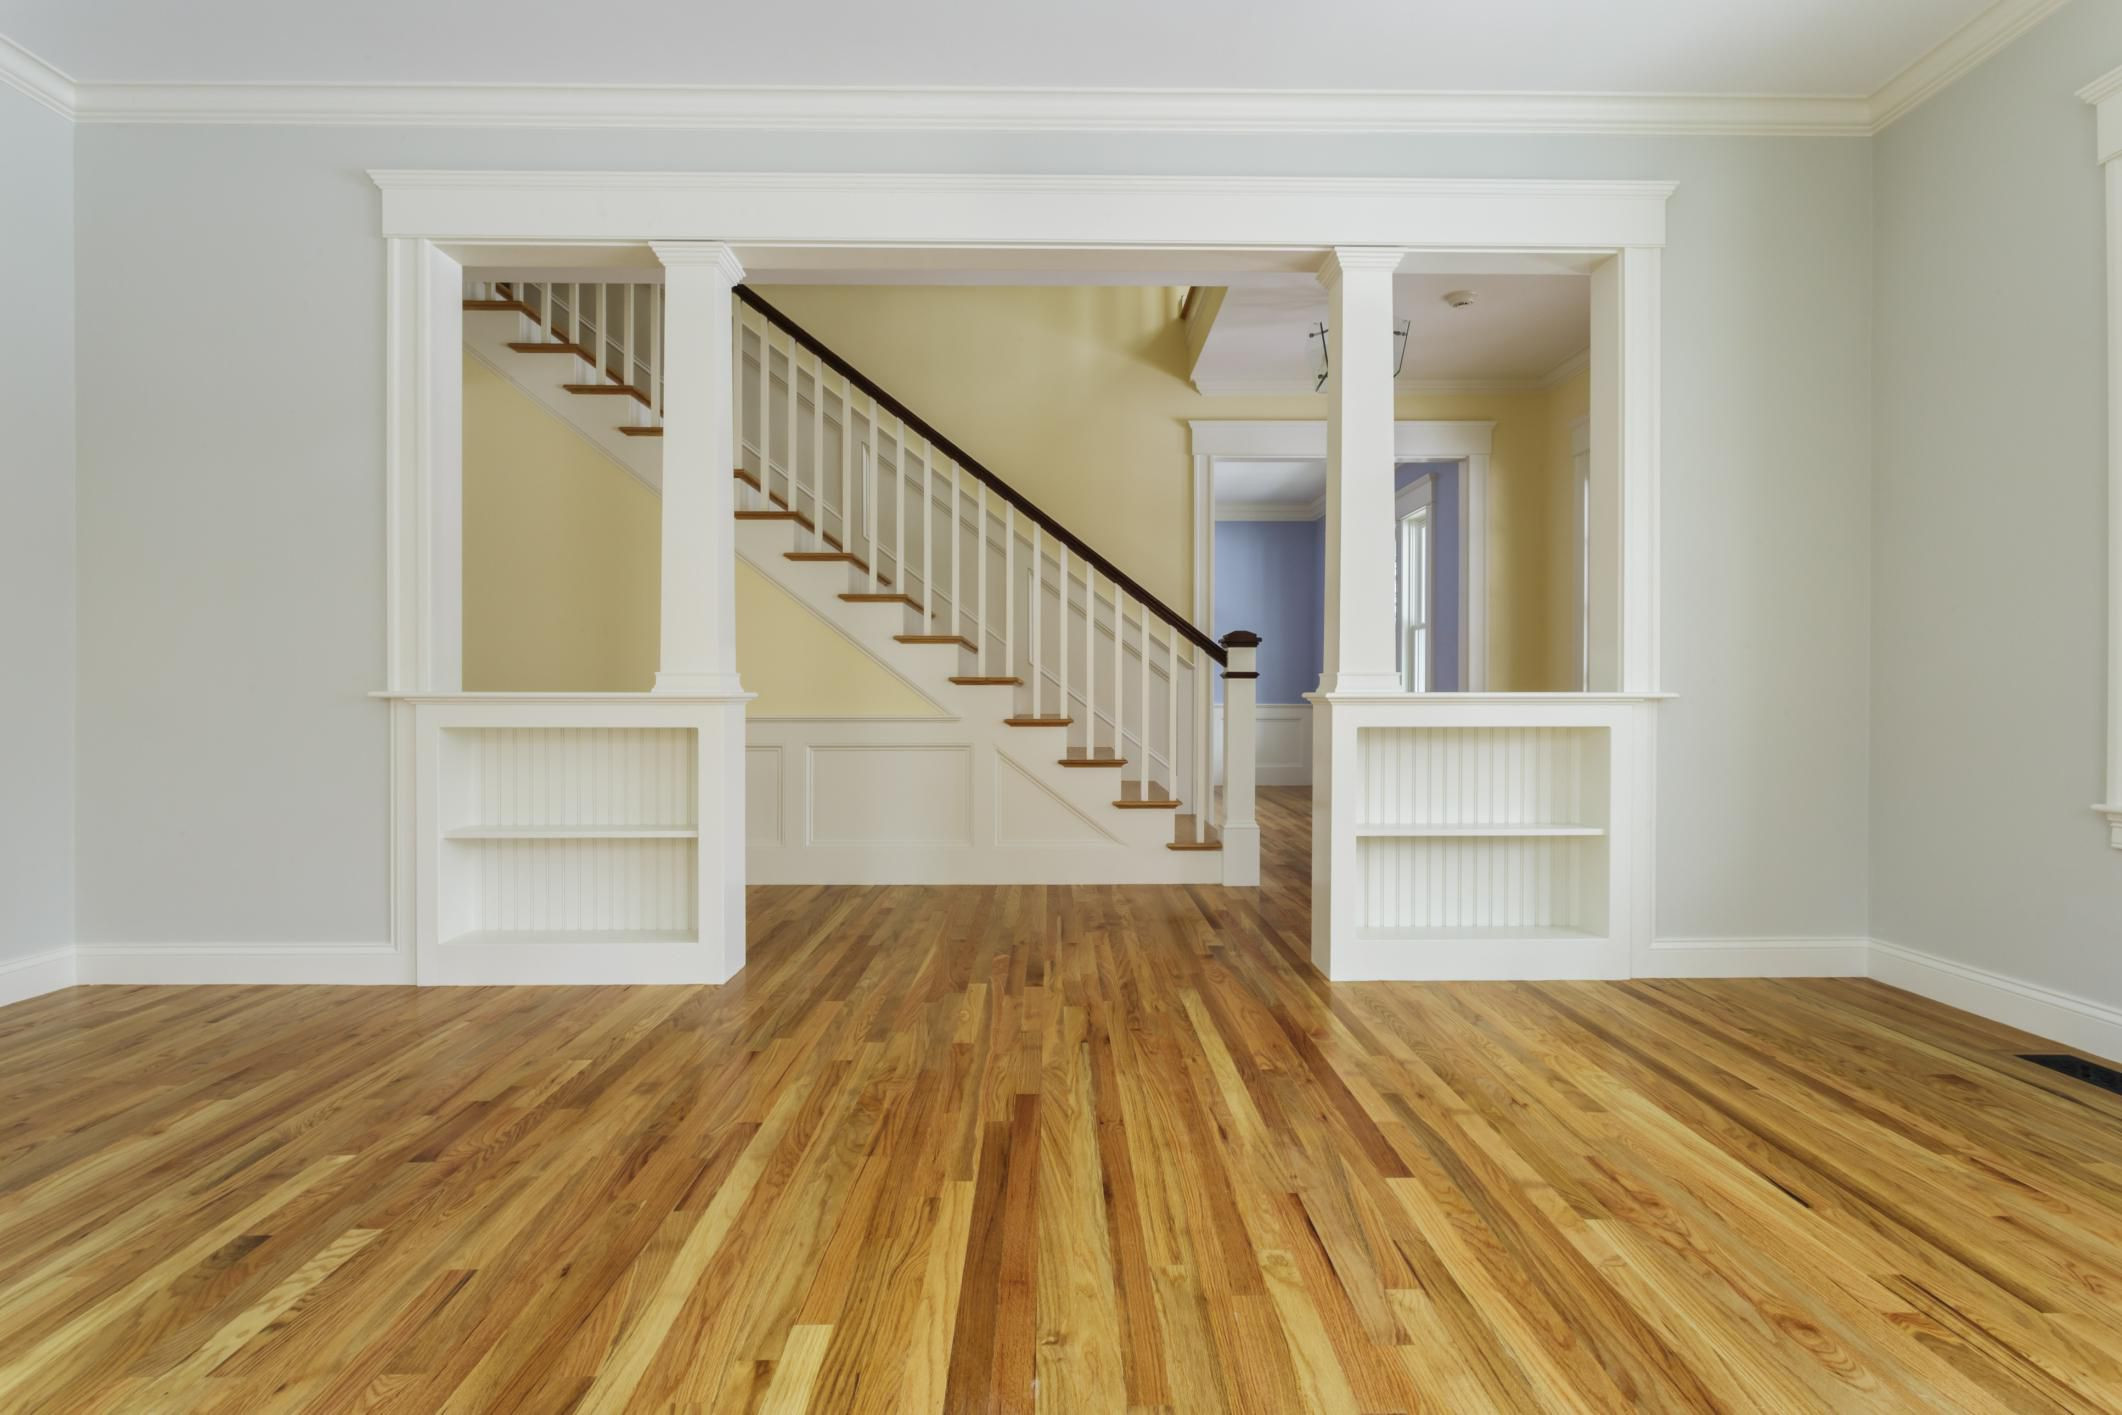 16 Lovely Price for Sanding and Refinishing Hardwood Floors 2023 free download price for sanding and refinishing hardwood floors of guide to solid hardwood floors for 168686571 56a49f213df78cf772834e24